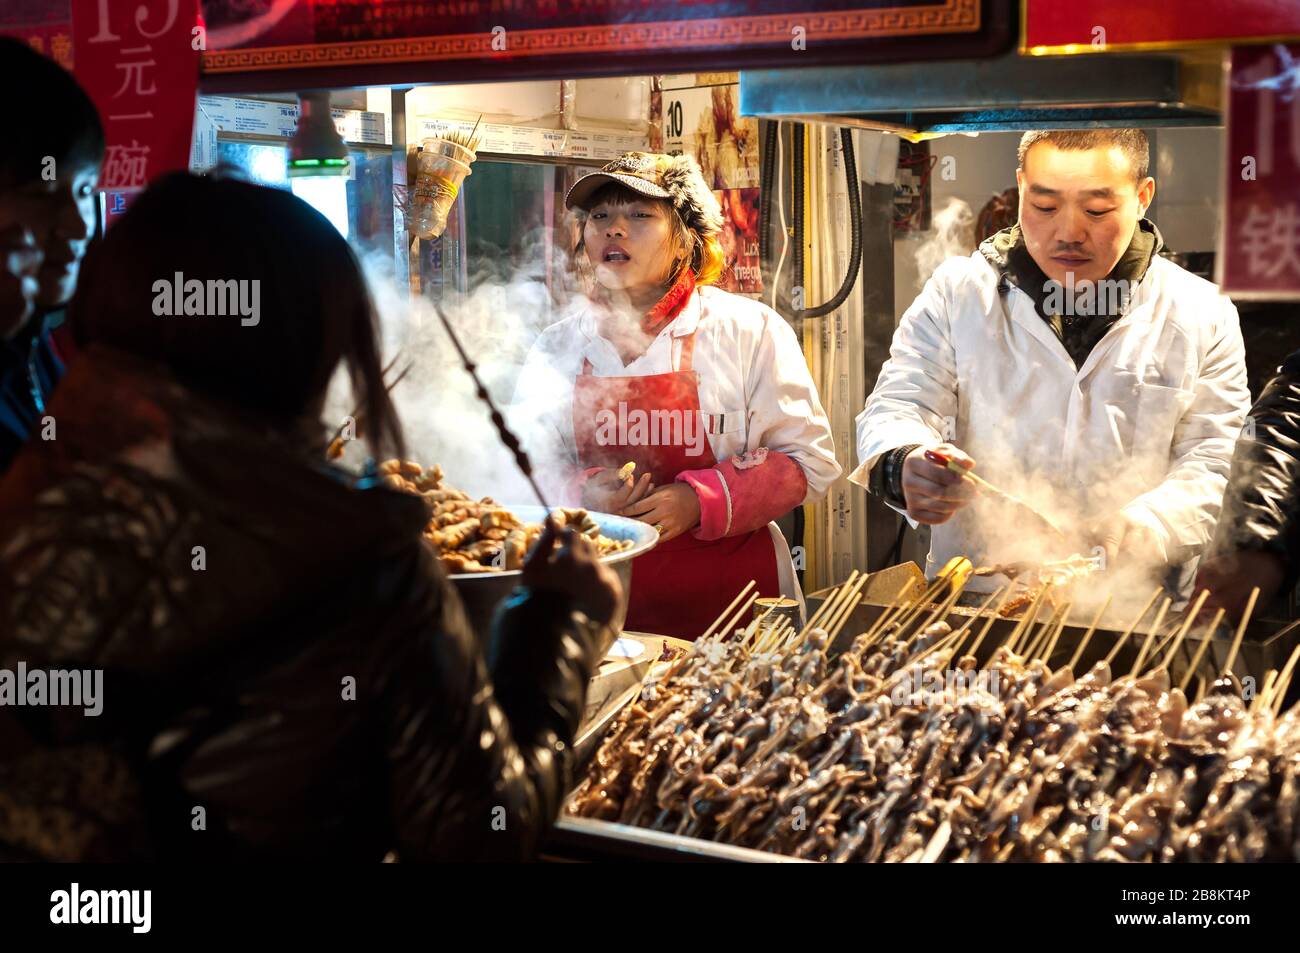 WANGFUJING NIGHT MARKET, BEIJING - DEC 25, 2013 - Snack vendors selling strange meat on sticks at Wangfujing snack street, Beijing Stock Photo